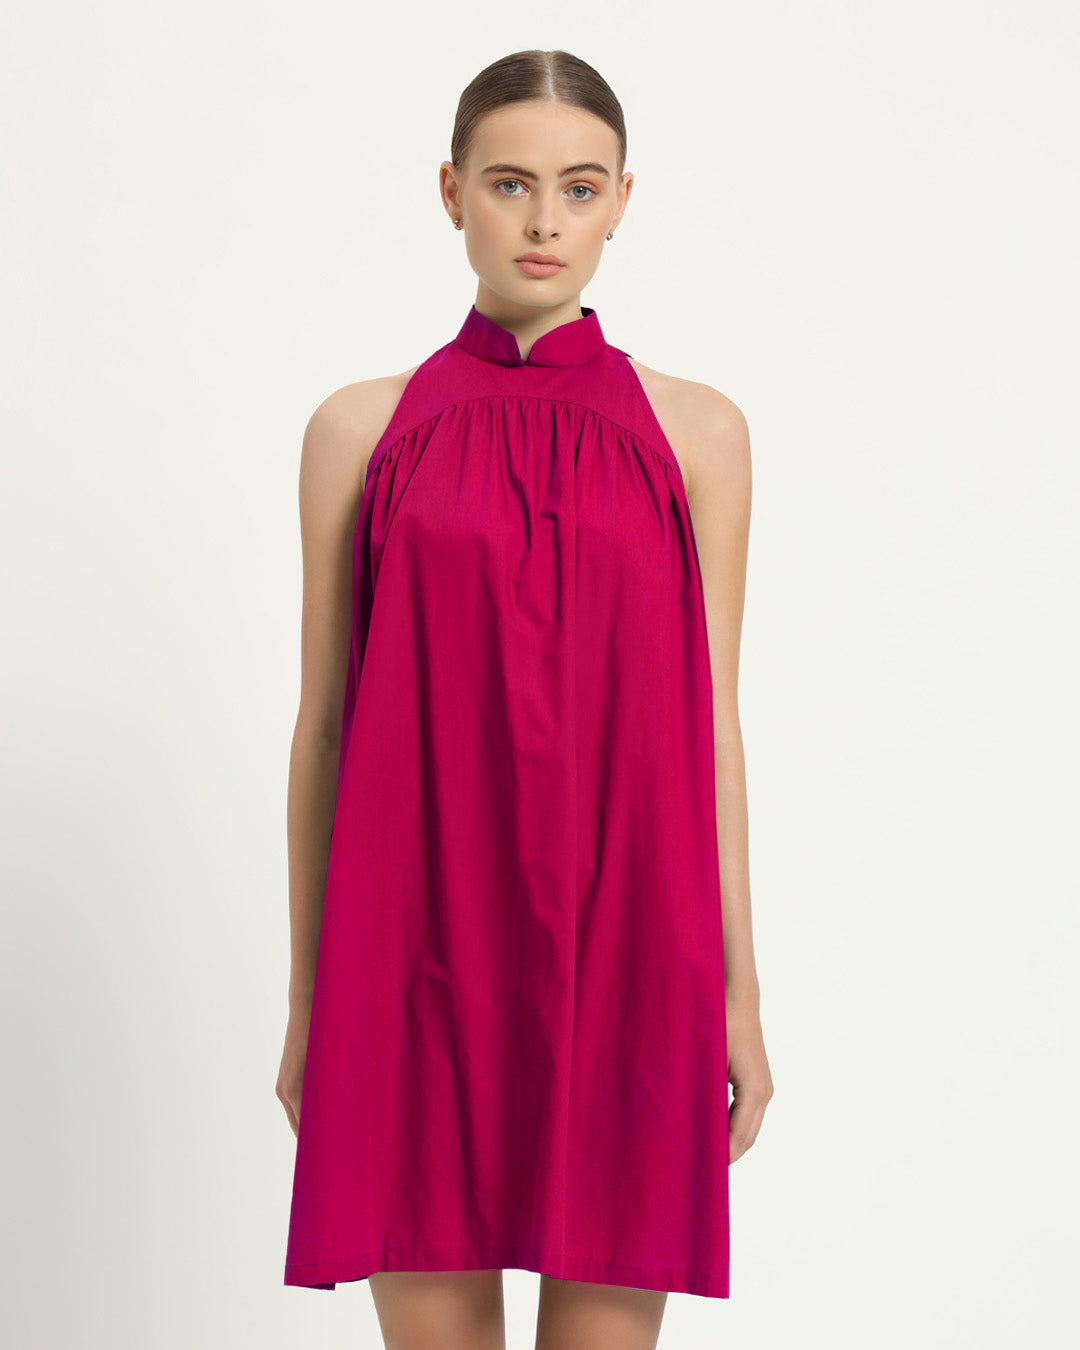 The Eruft Berry Cotton Dress